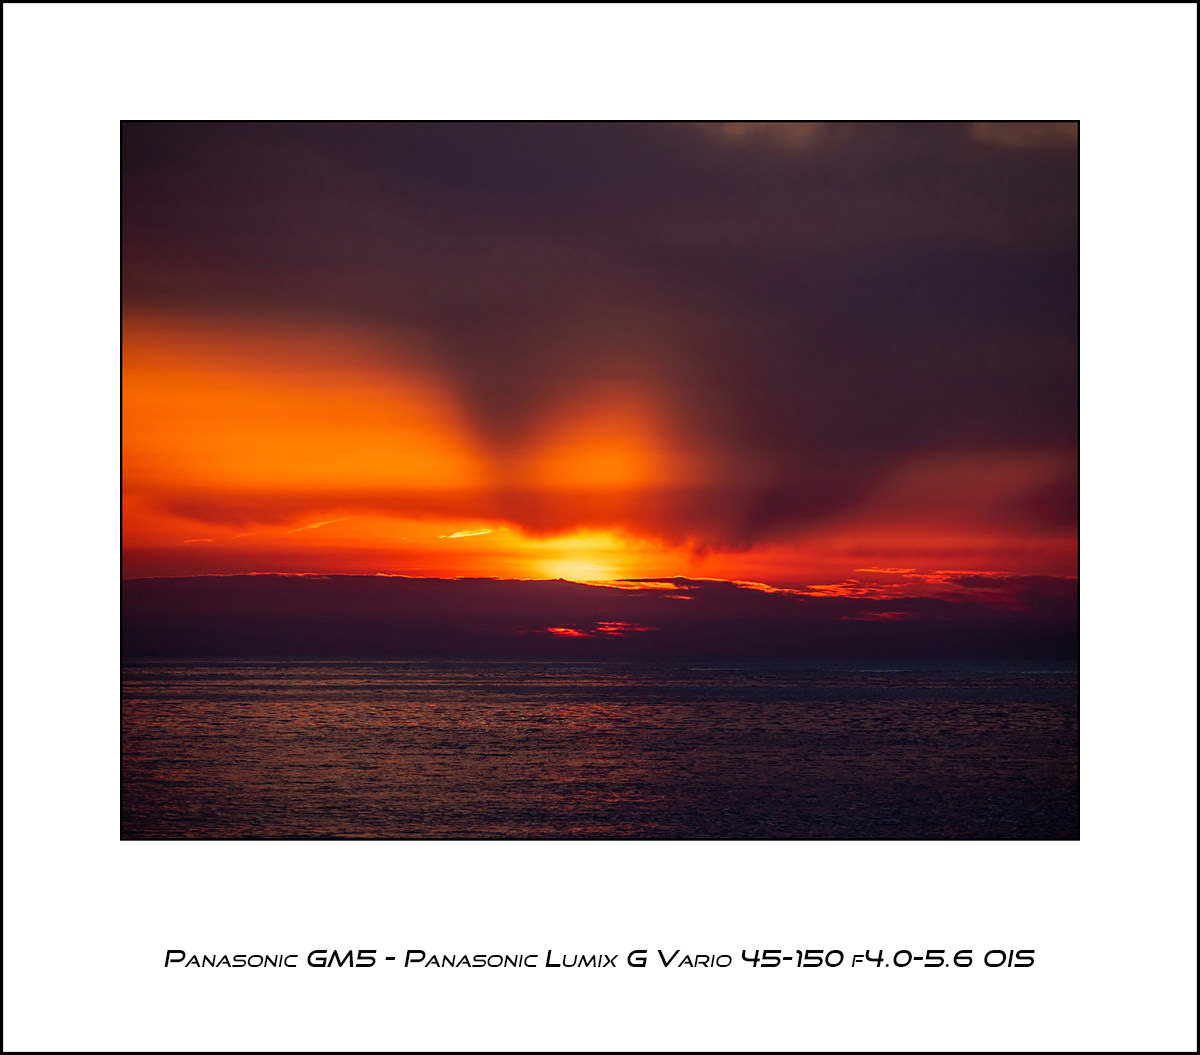 Panasonic GM5 - Panasonic Lumix 45-150 f4.0-5.6